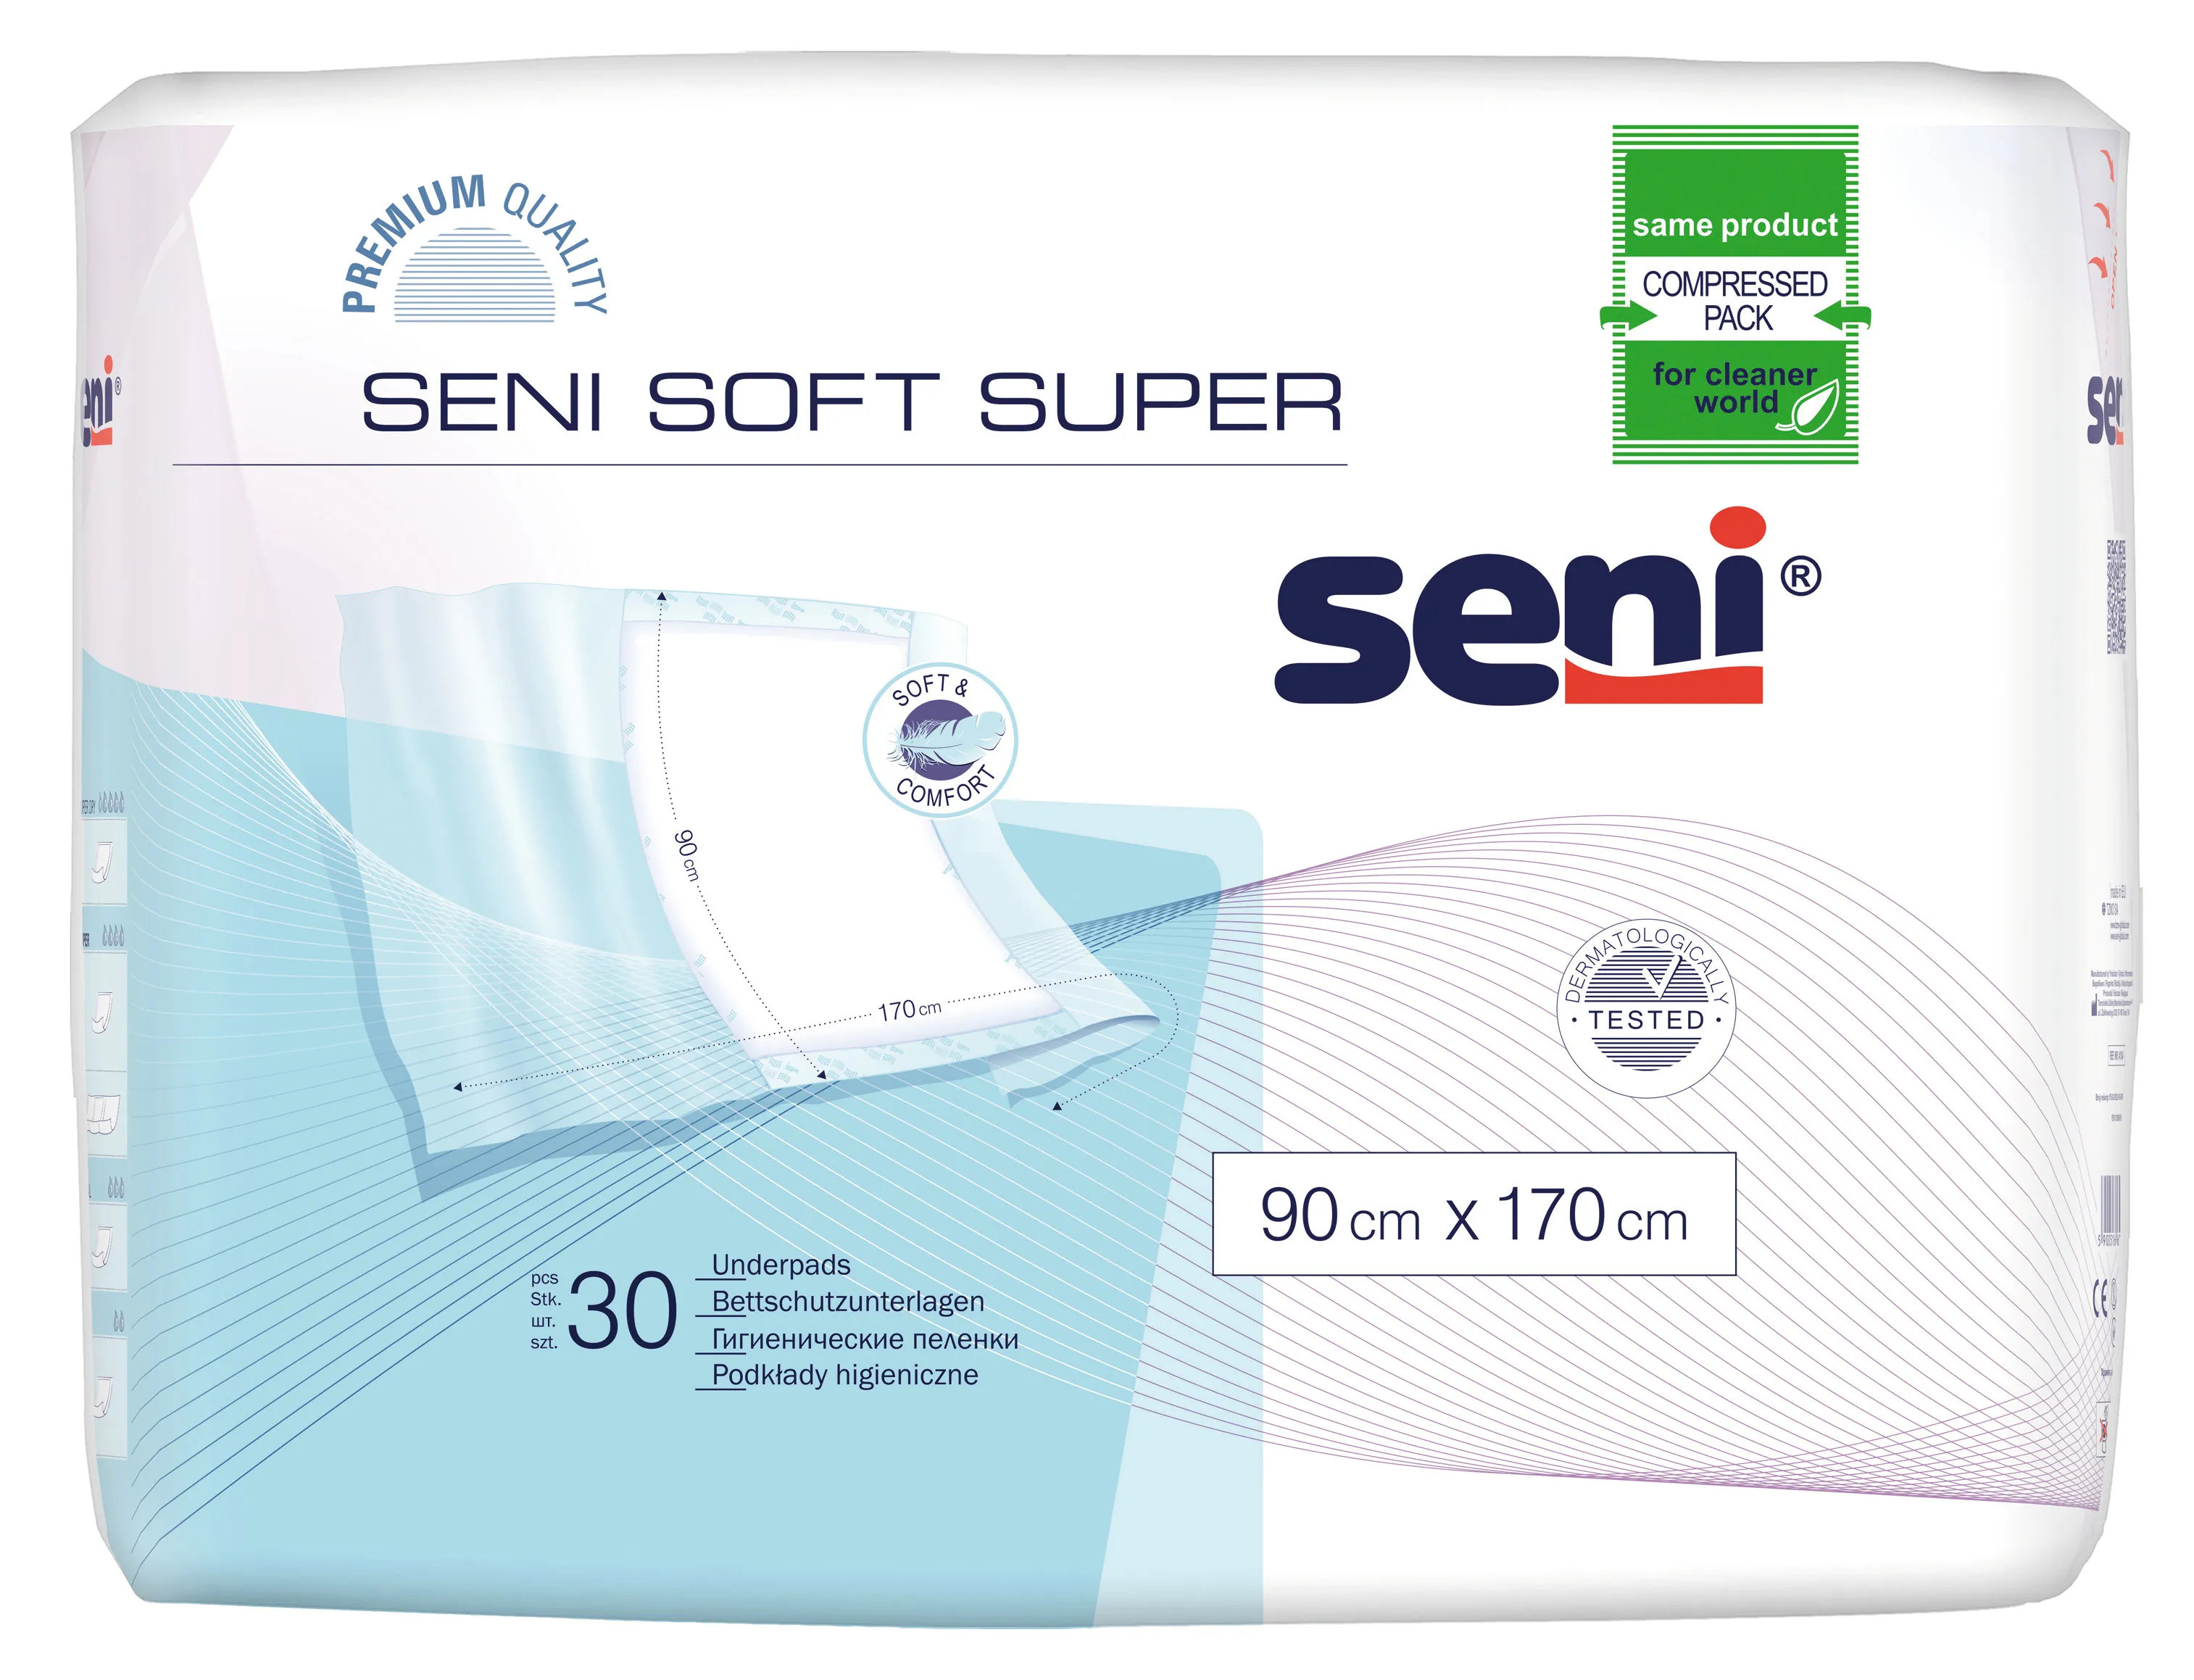 Seni Soft Super, podkłady higieniczne, 90x170 cm, 30 sztuk